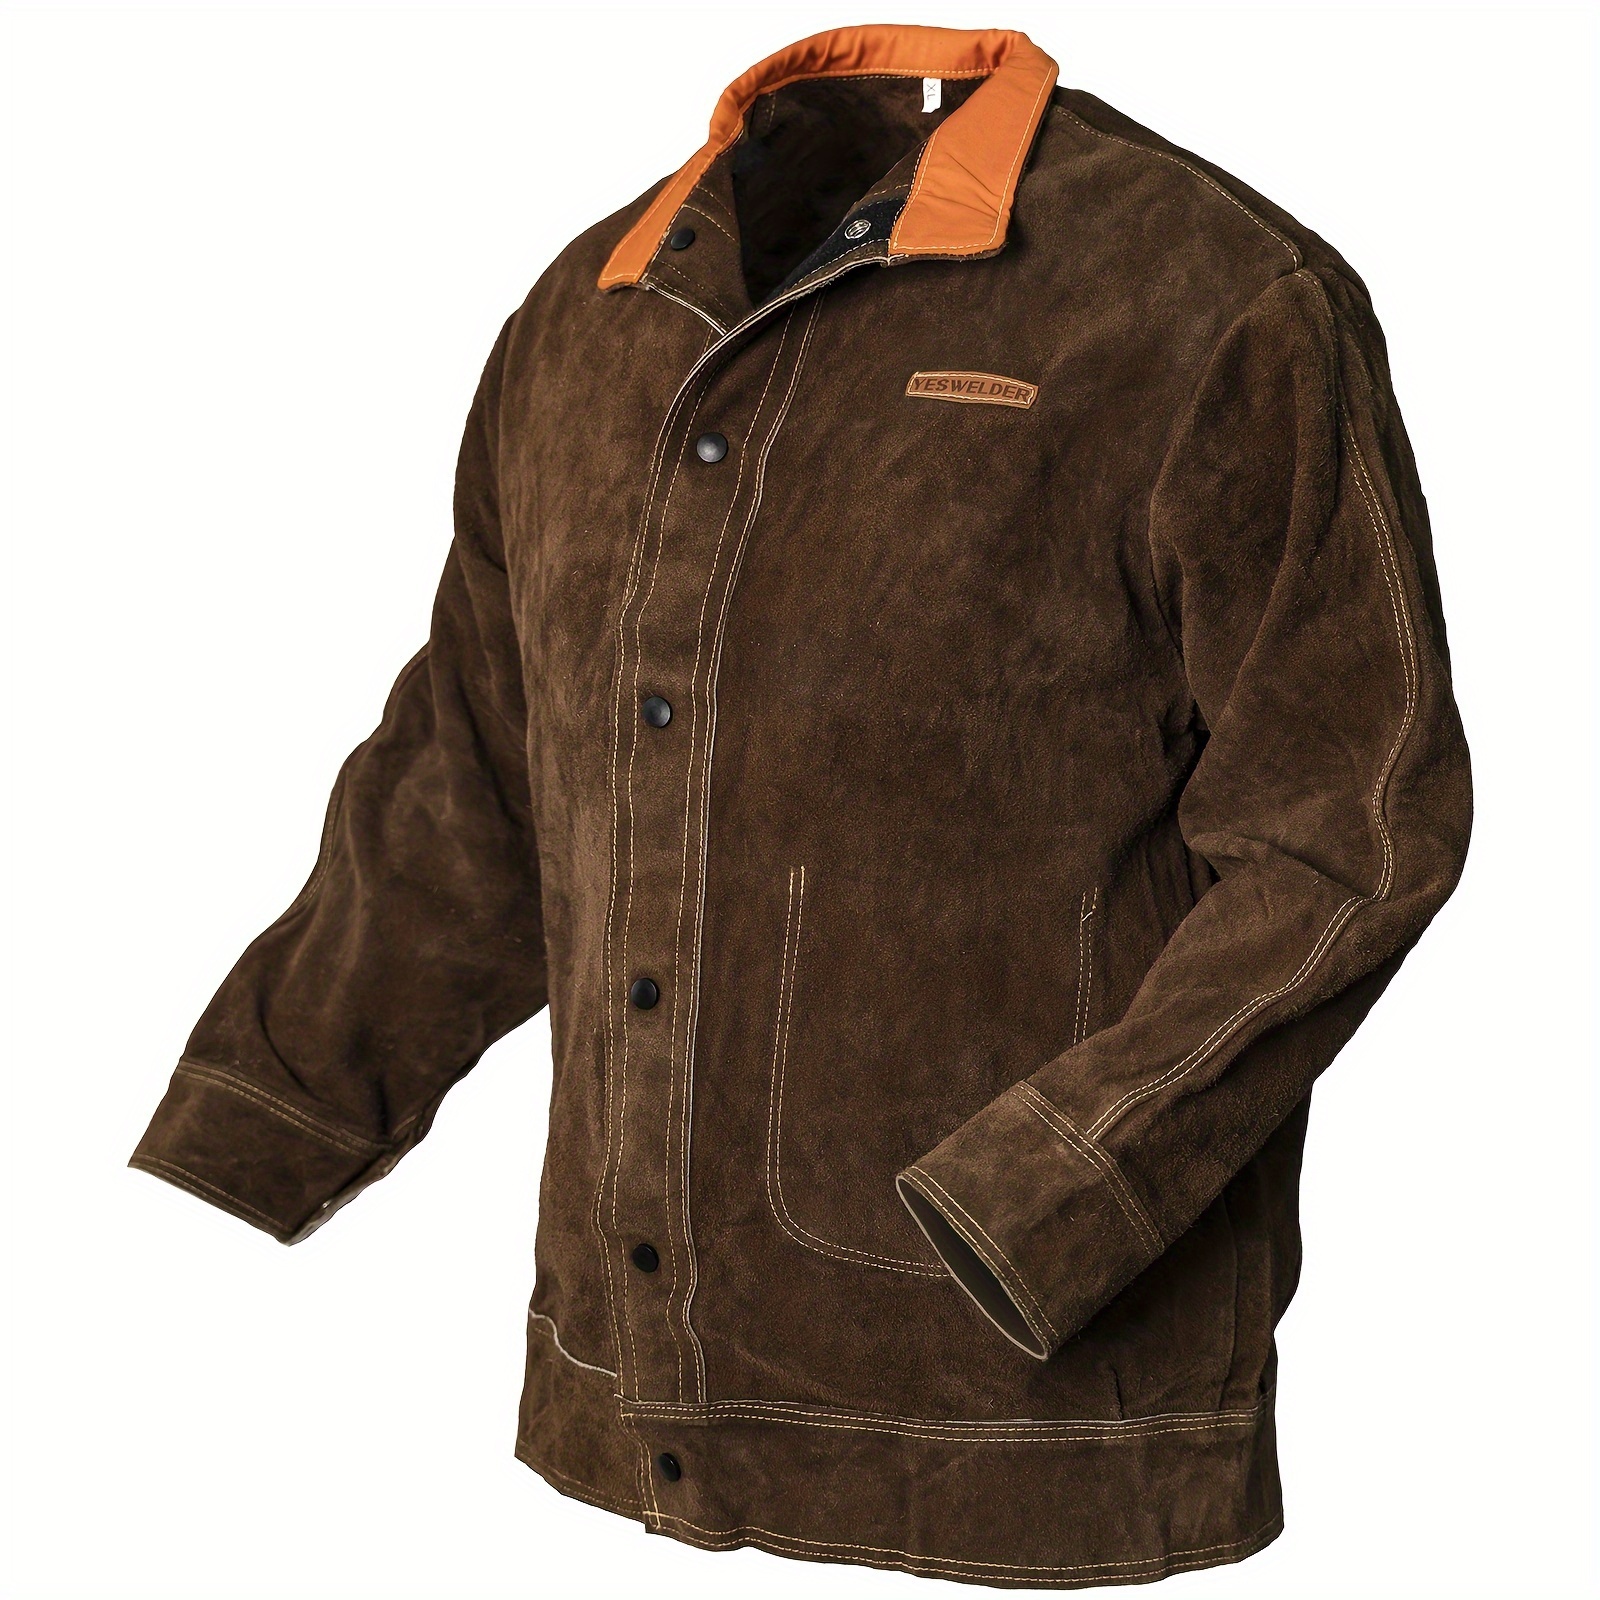 

Yeswelder Leather Welding Jacket For Men Women, Heat Flame Resistant Welding Coat, Heavy Duty Welder Jacket